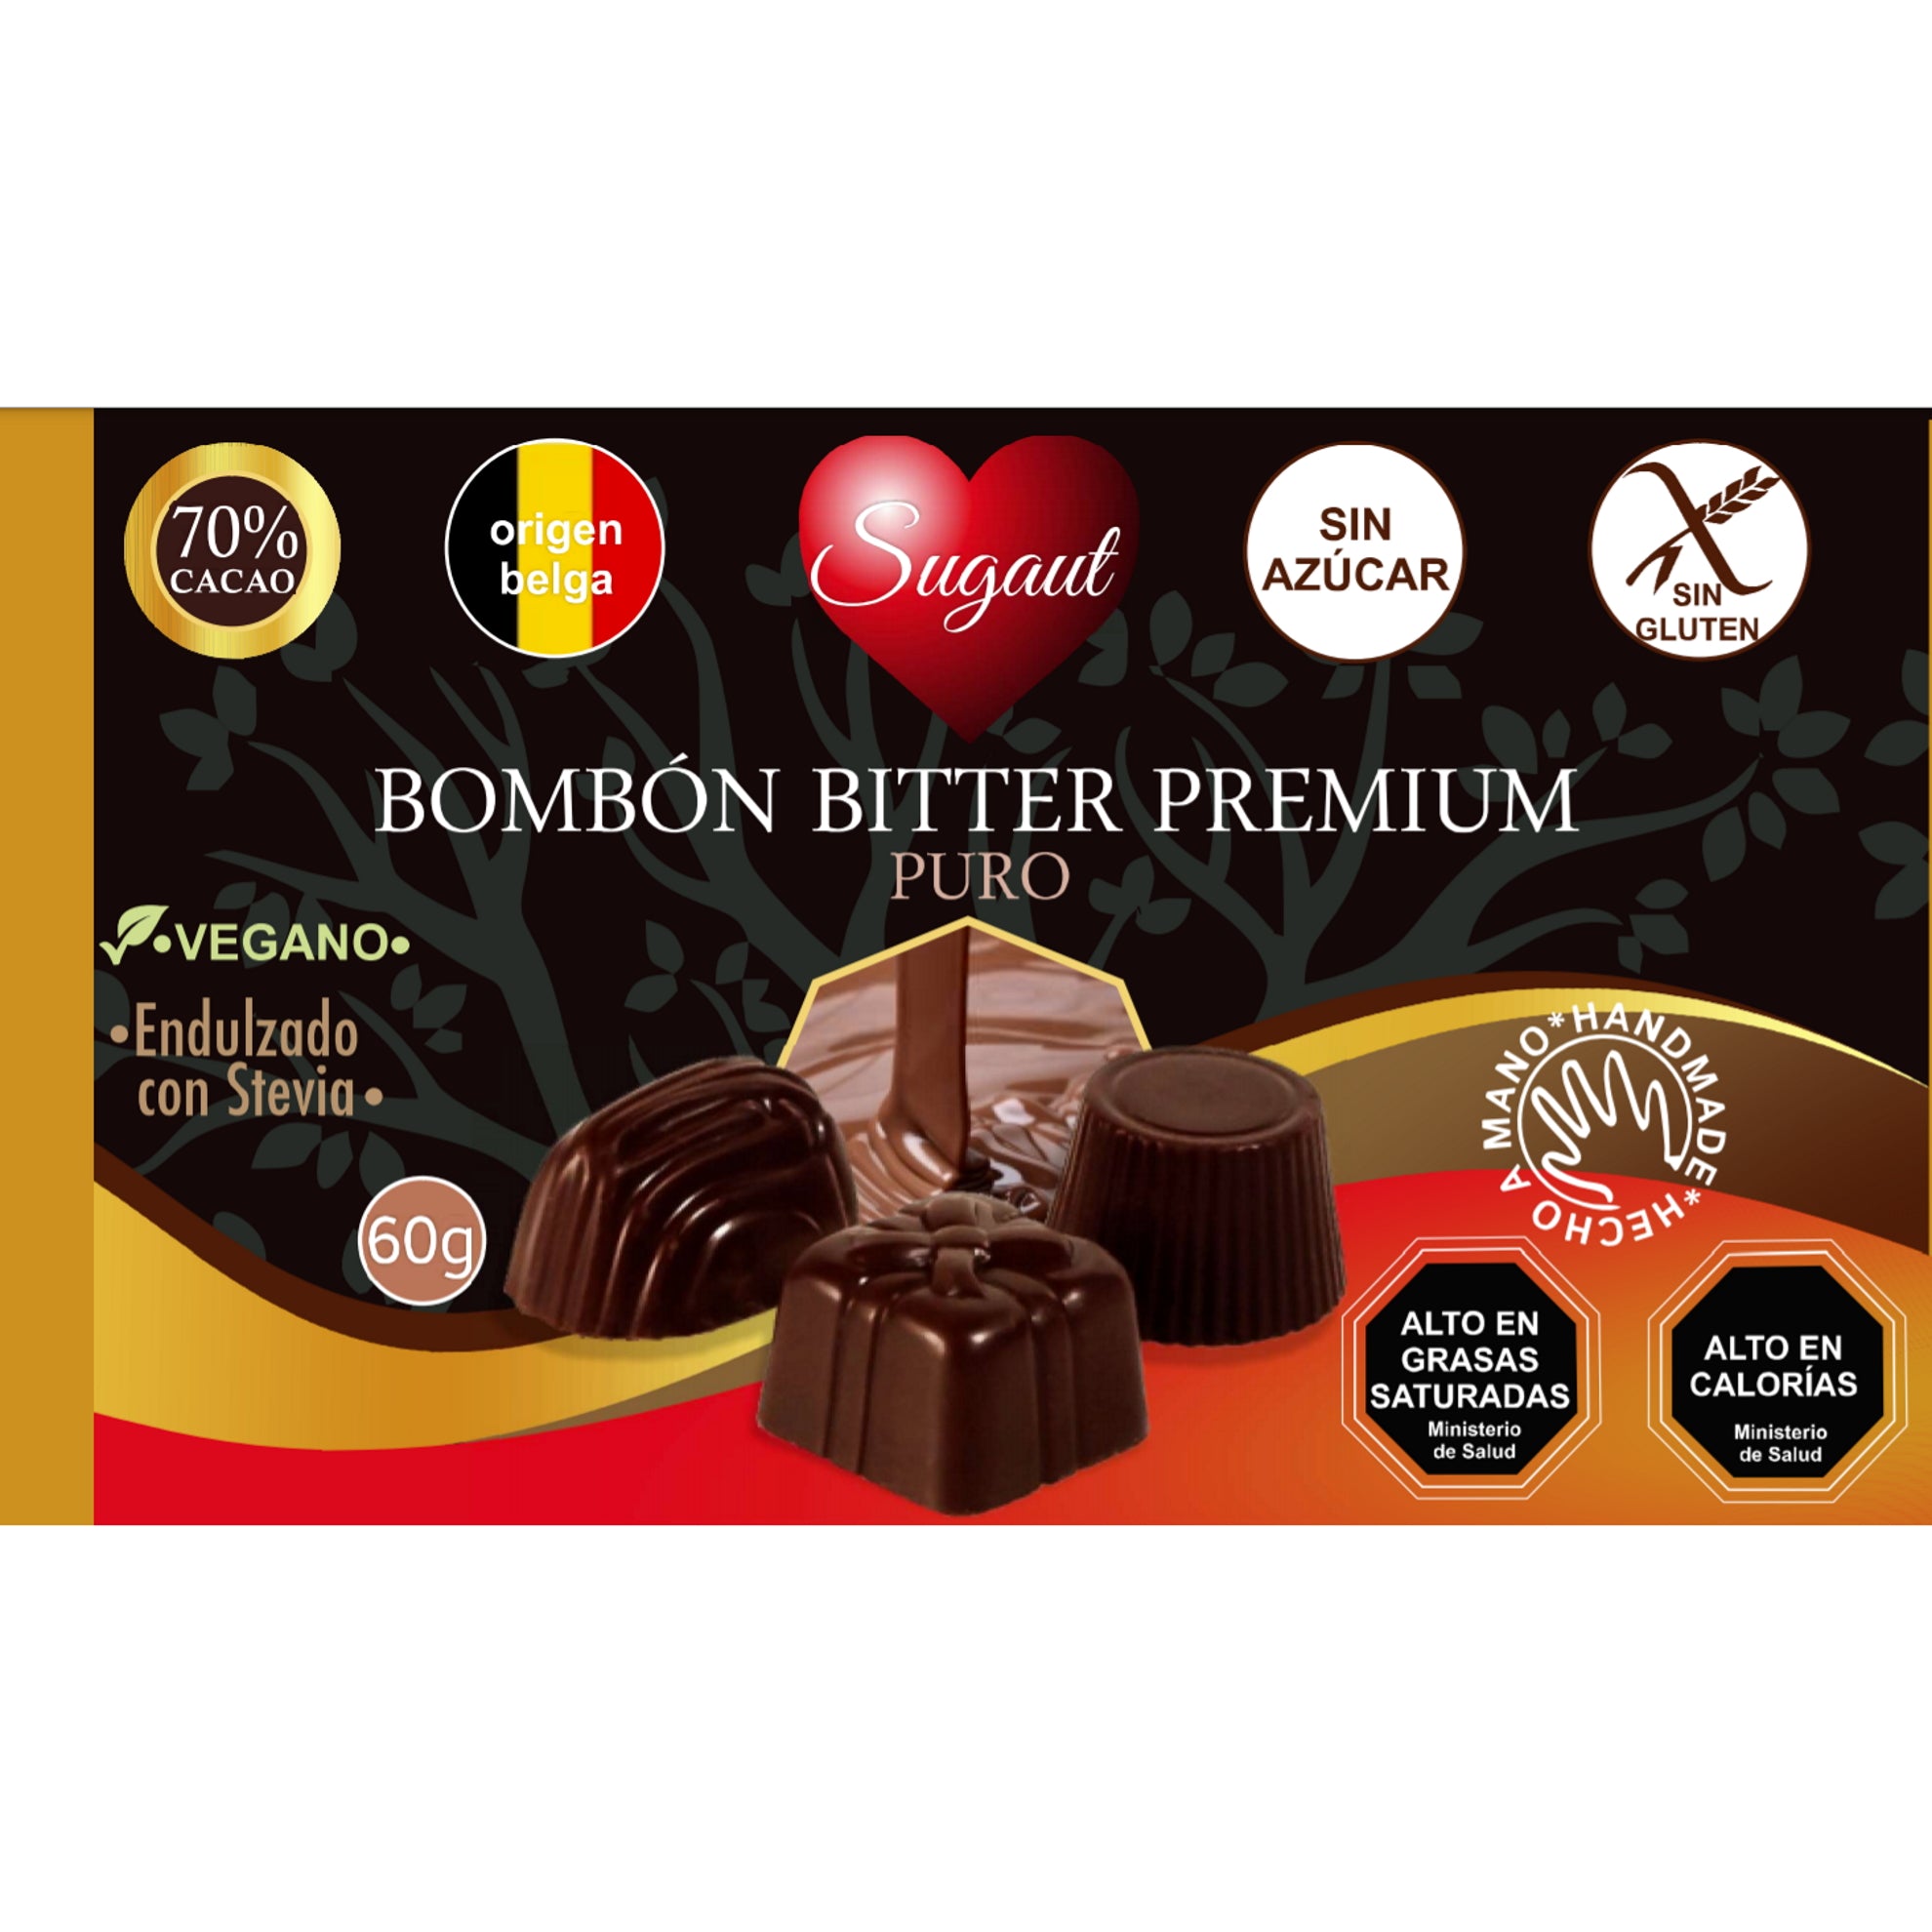 Bombones Bitter Premium PURO 70 % cacao 60g